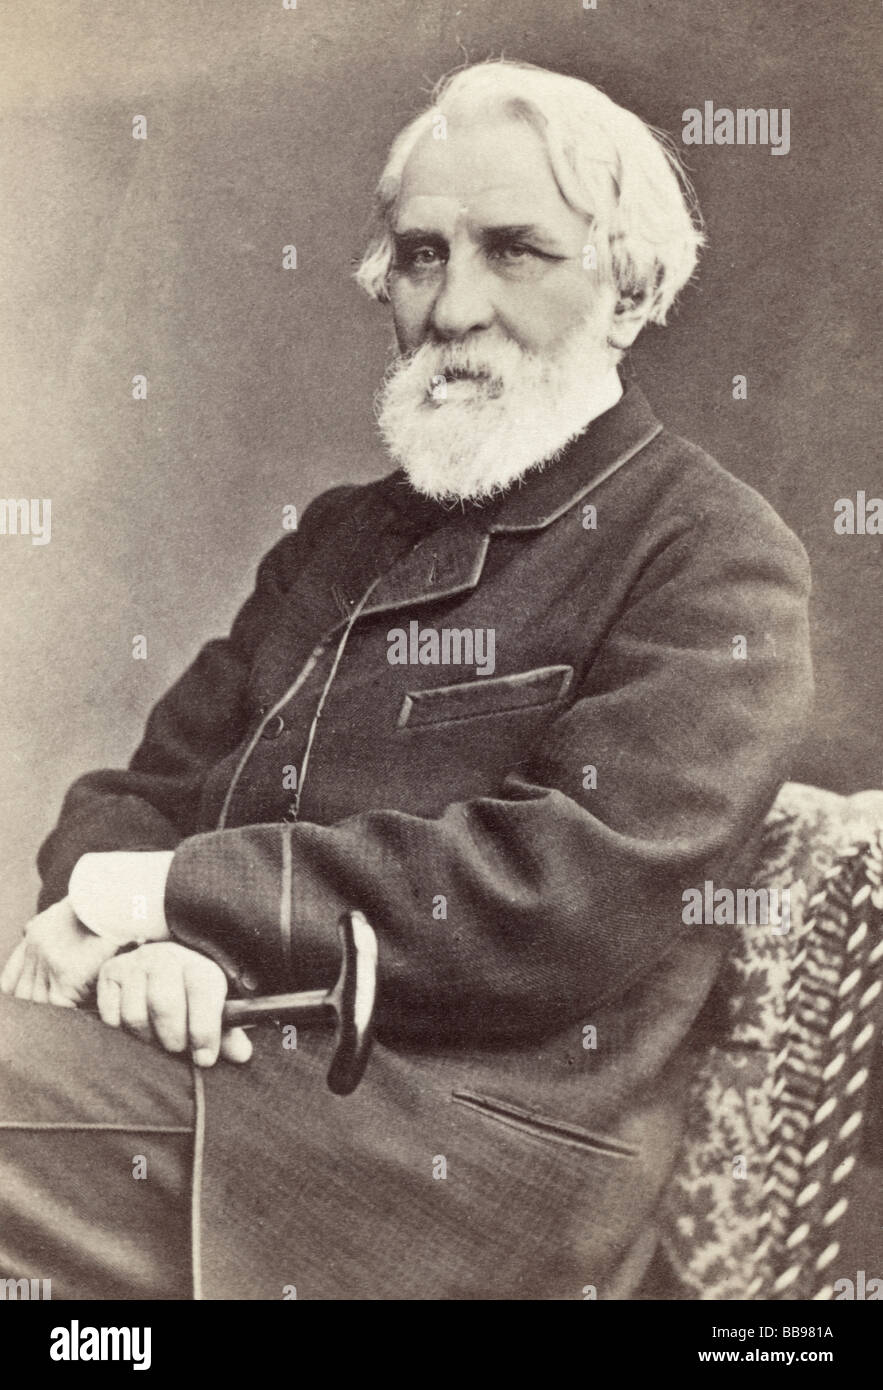 Ivan Sergeyevich Turgenev, 1818 - 1883. Romanziere e drammaturgo russo. Foto Stock